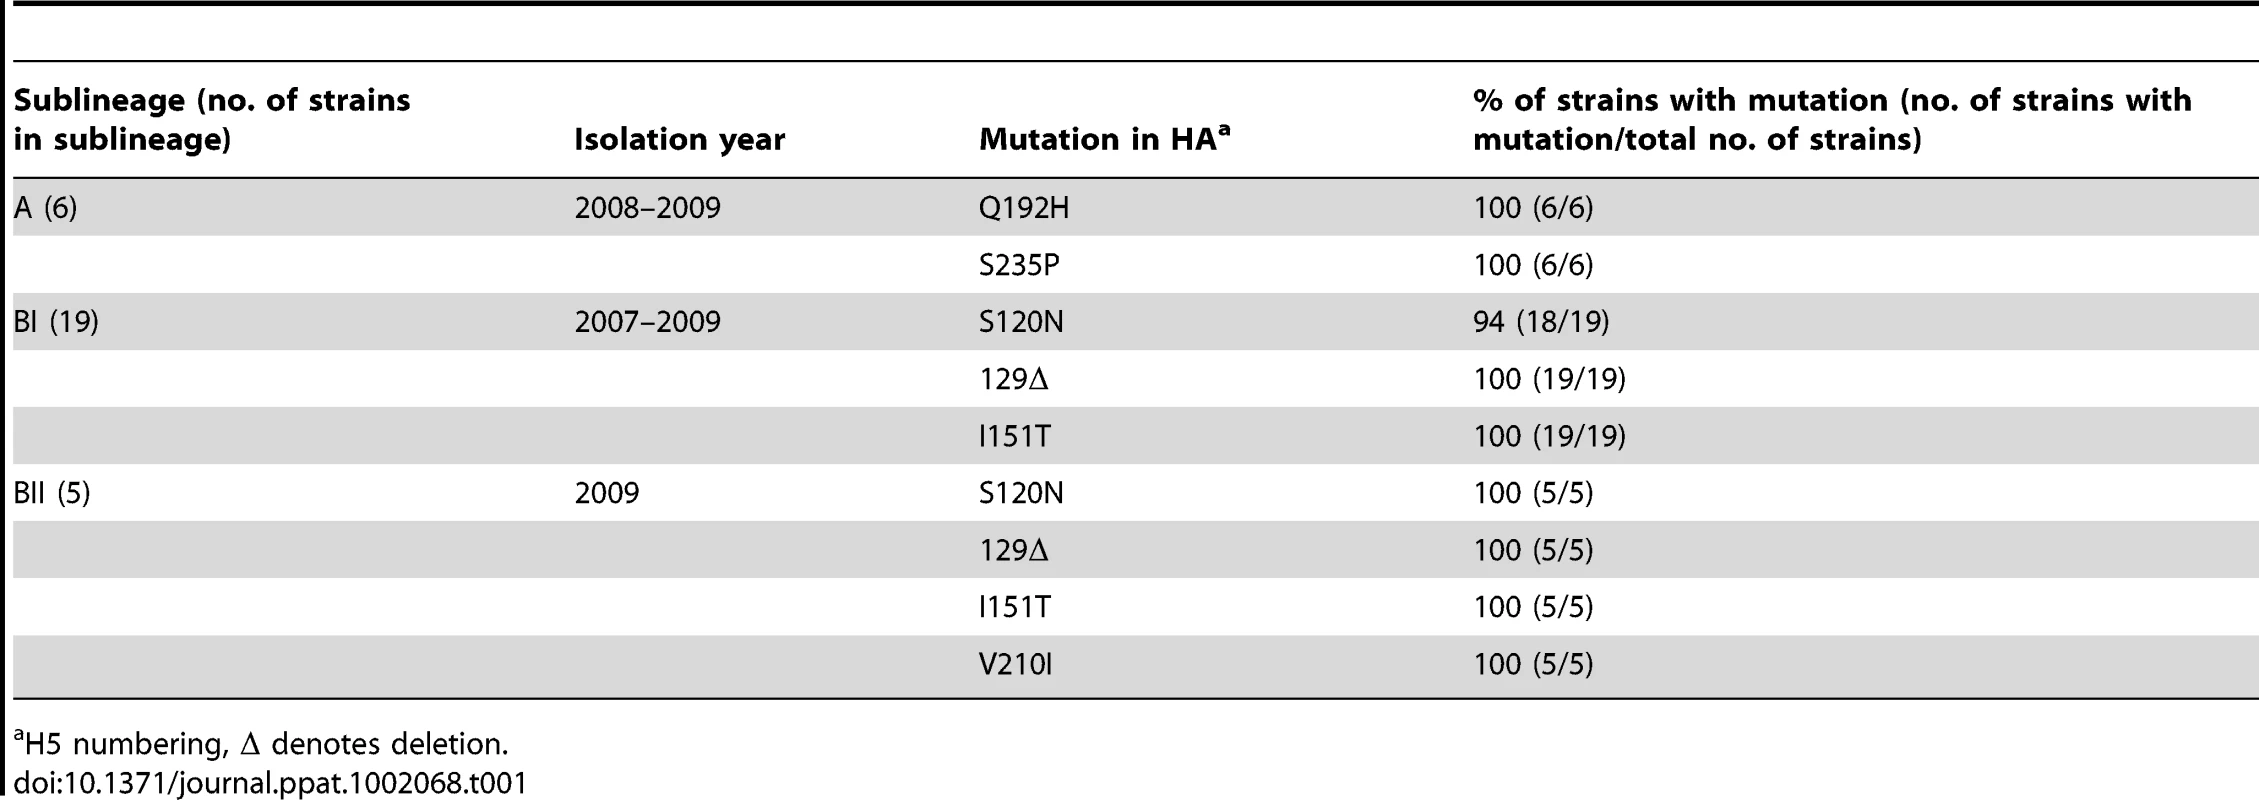 Mutations in HA genes in H5 viruses in sublineages A, BI and BII.